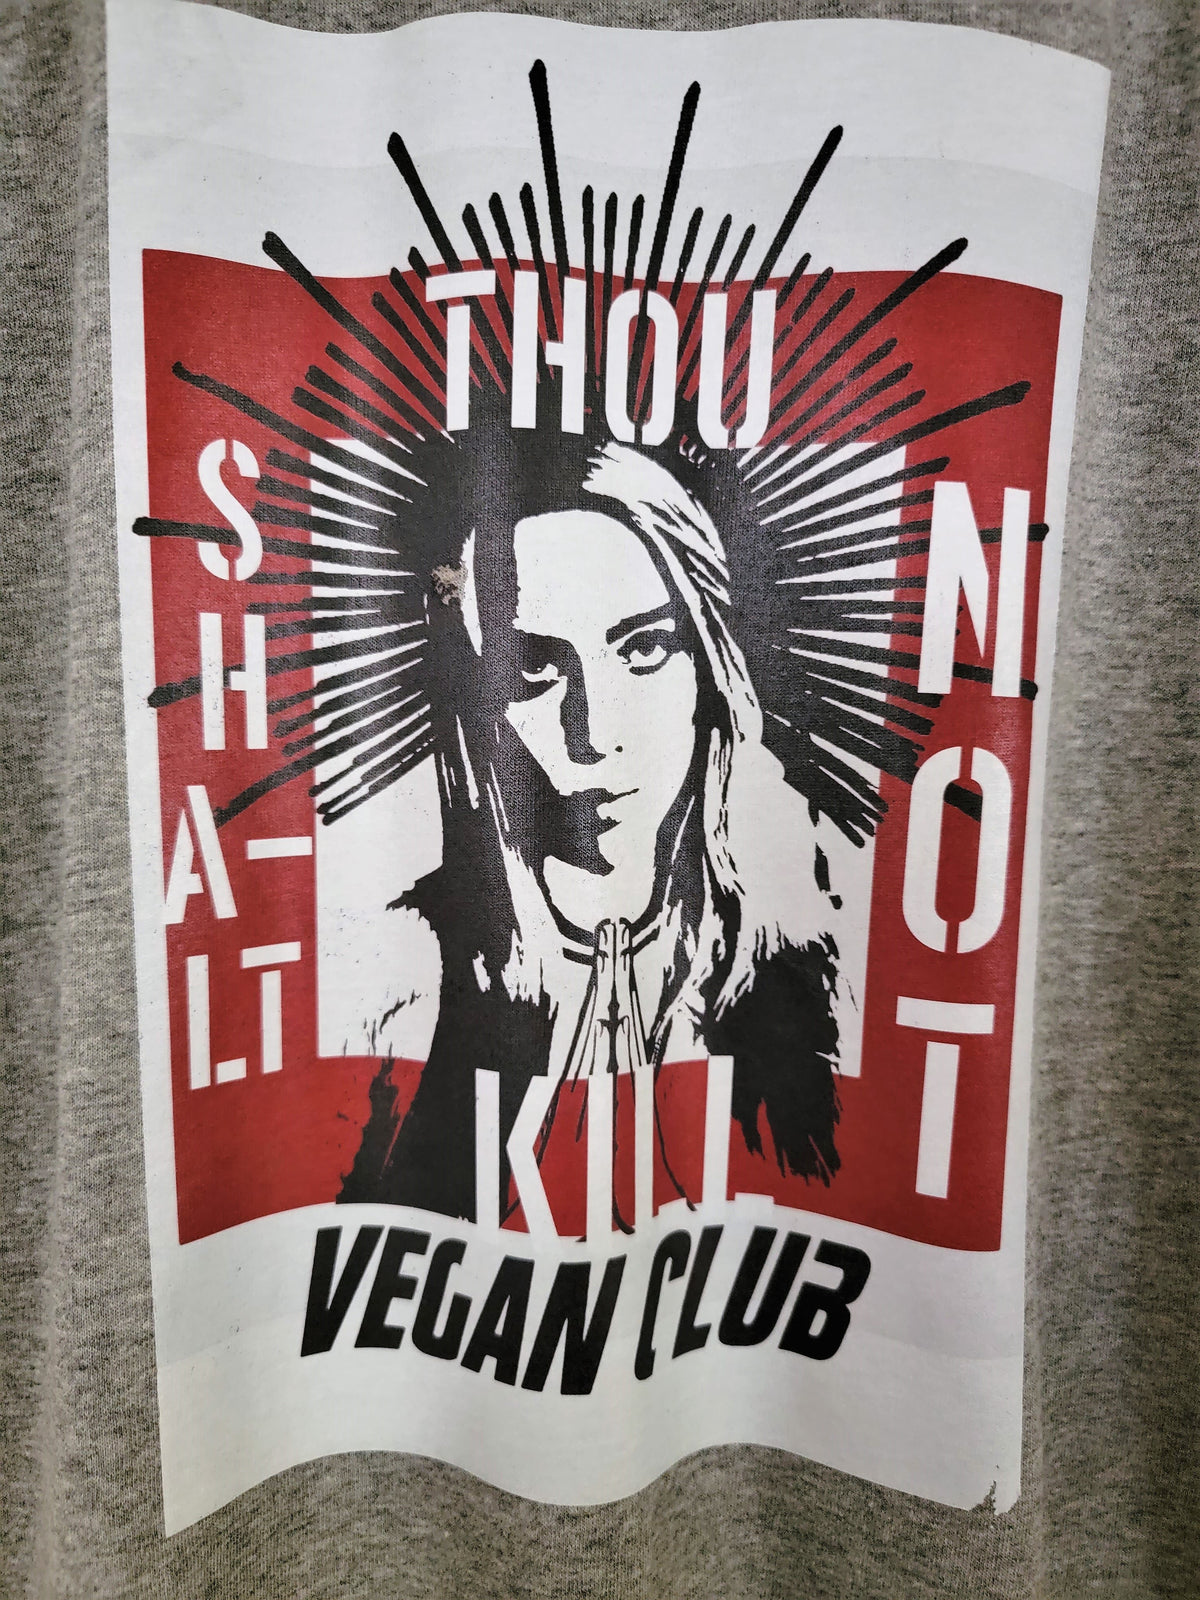 SOLD OUT - Billie Eilish Vegan Club T-shirt Shalt Not Kill front color design